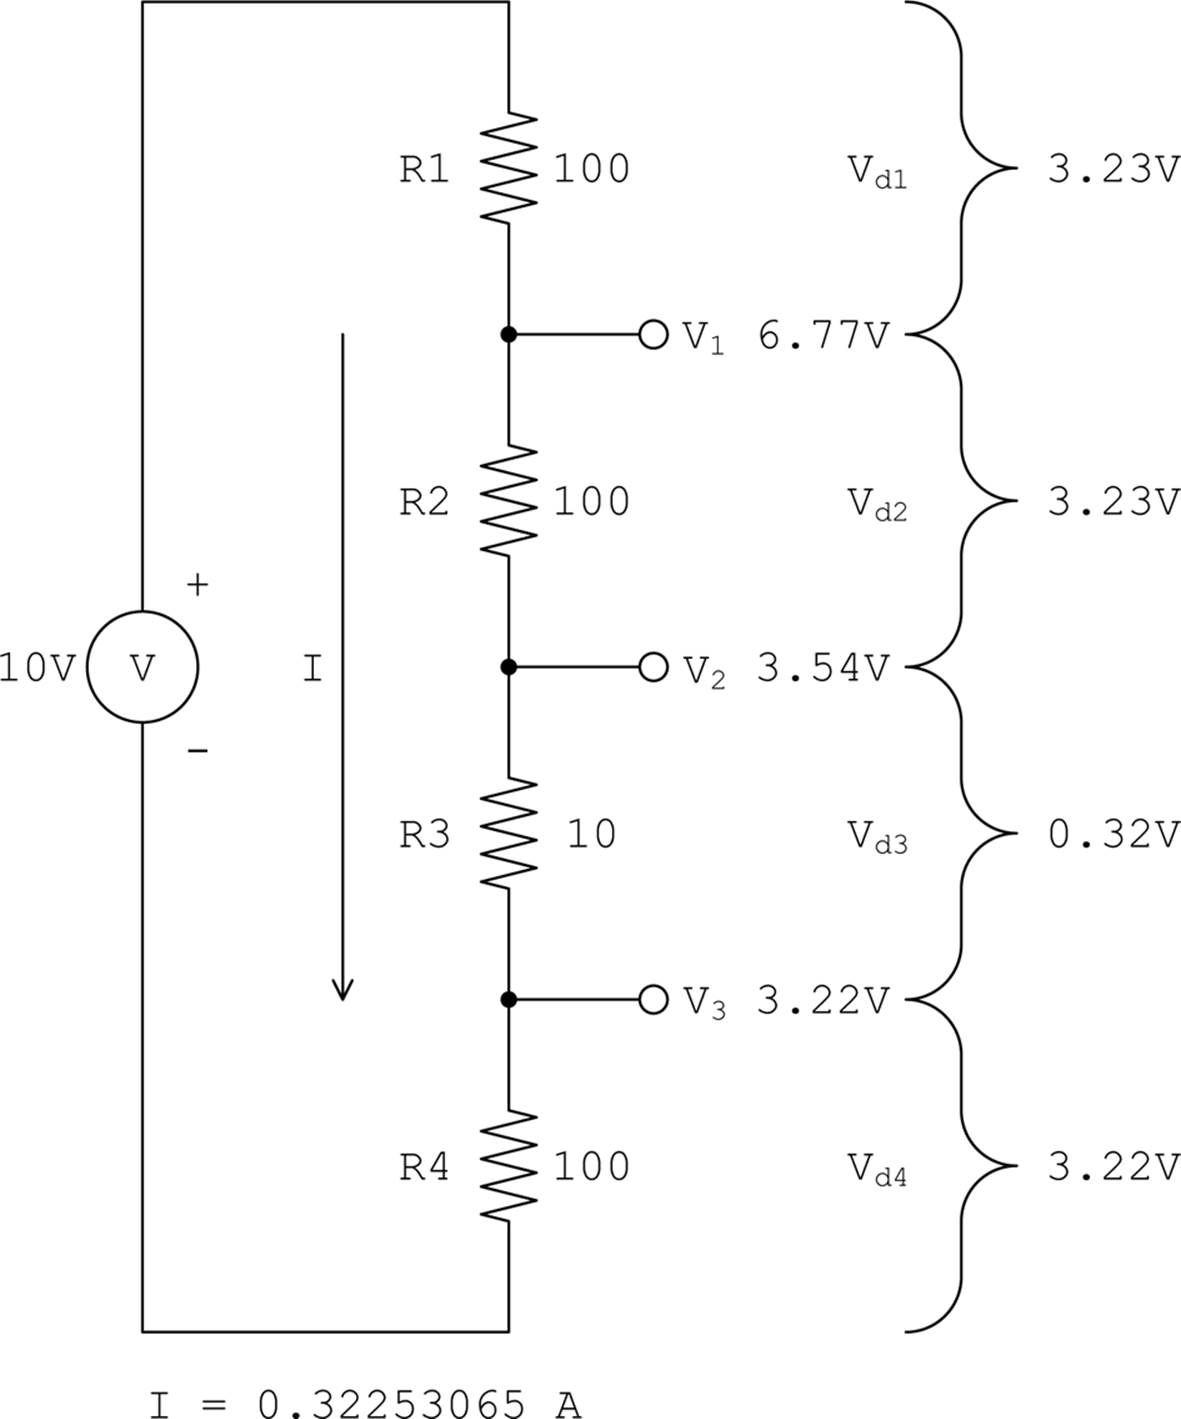 Series resistance network voltage drops